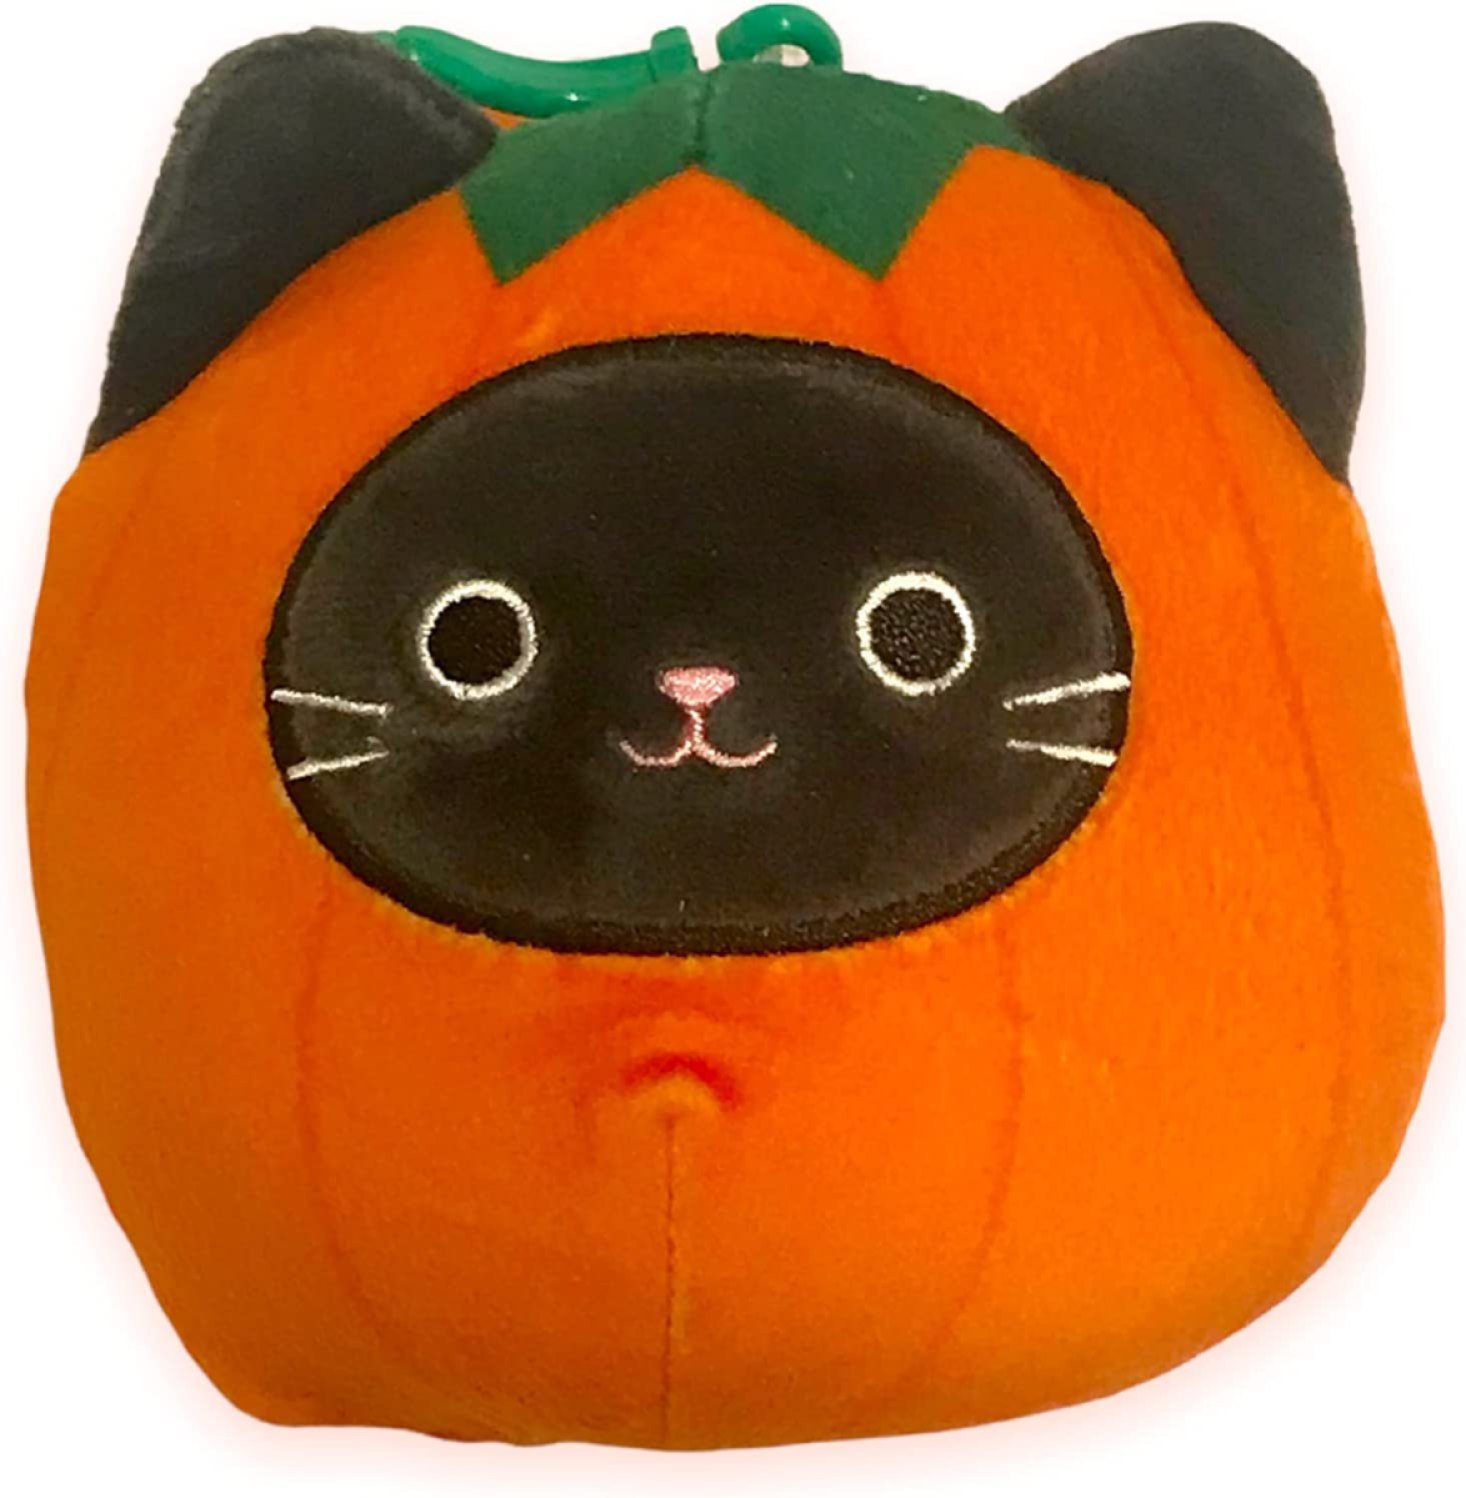 A black cat inside a pumpkin squishmallow.